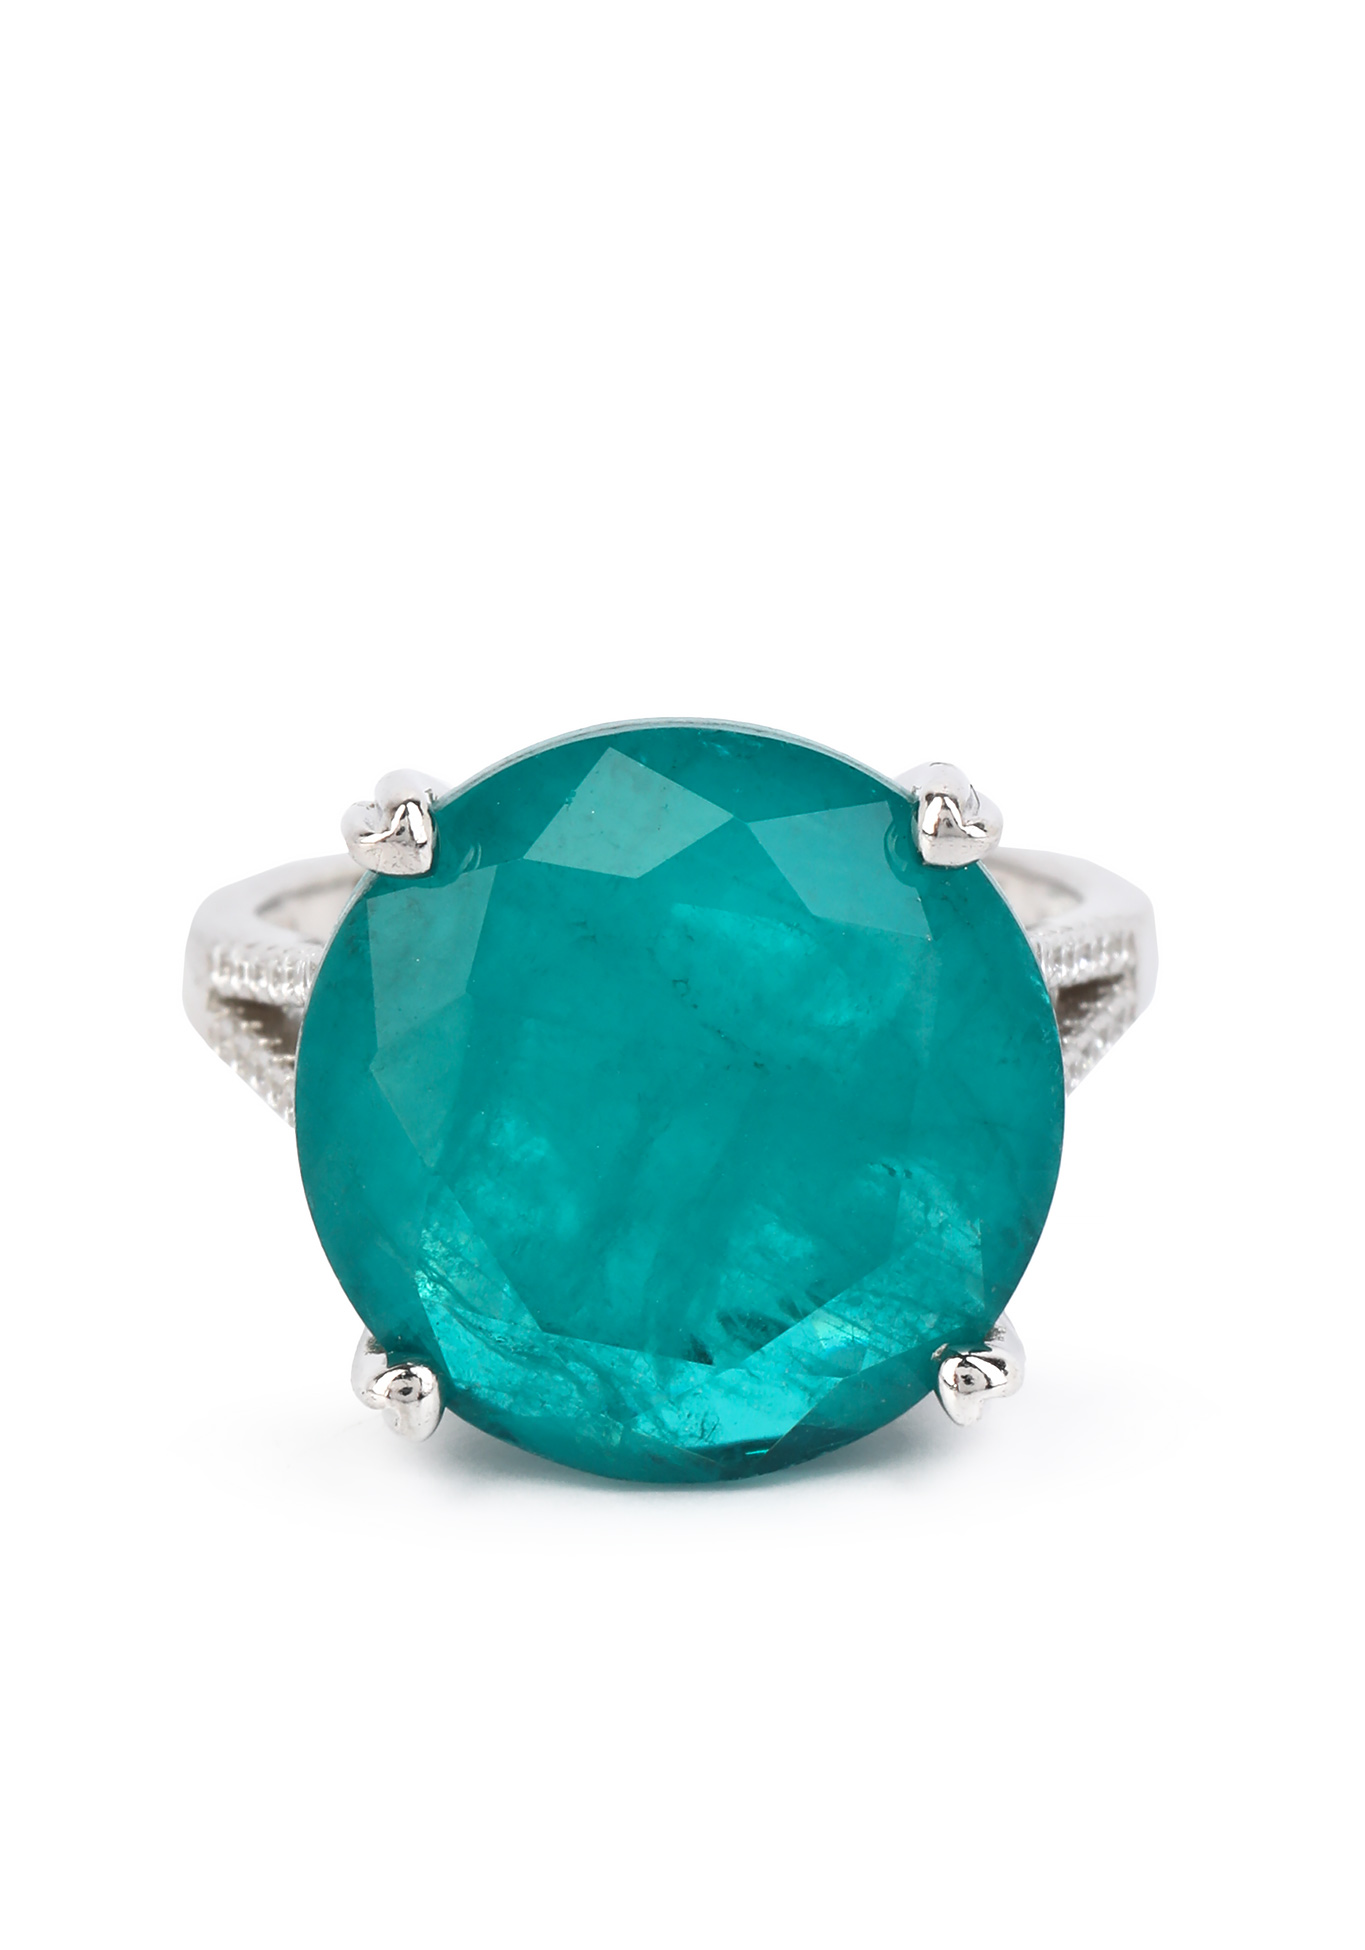 Кольцо серебряное "Леди" Fresh Jewelry, размер 19, цвет сиреневый солитер, сплит шенк - фото 4